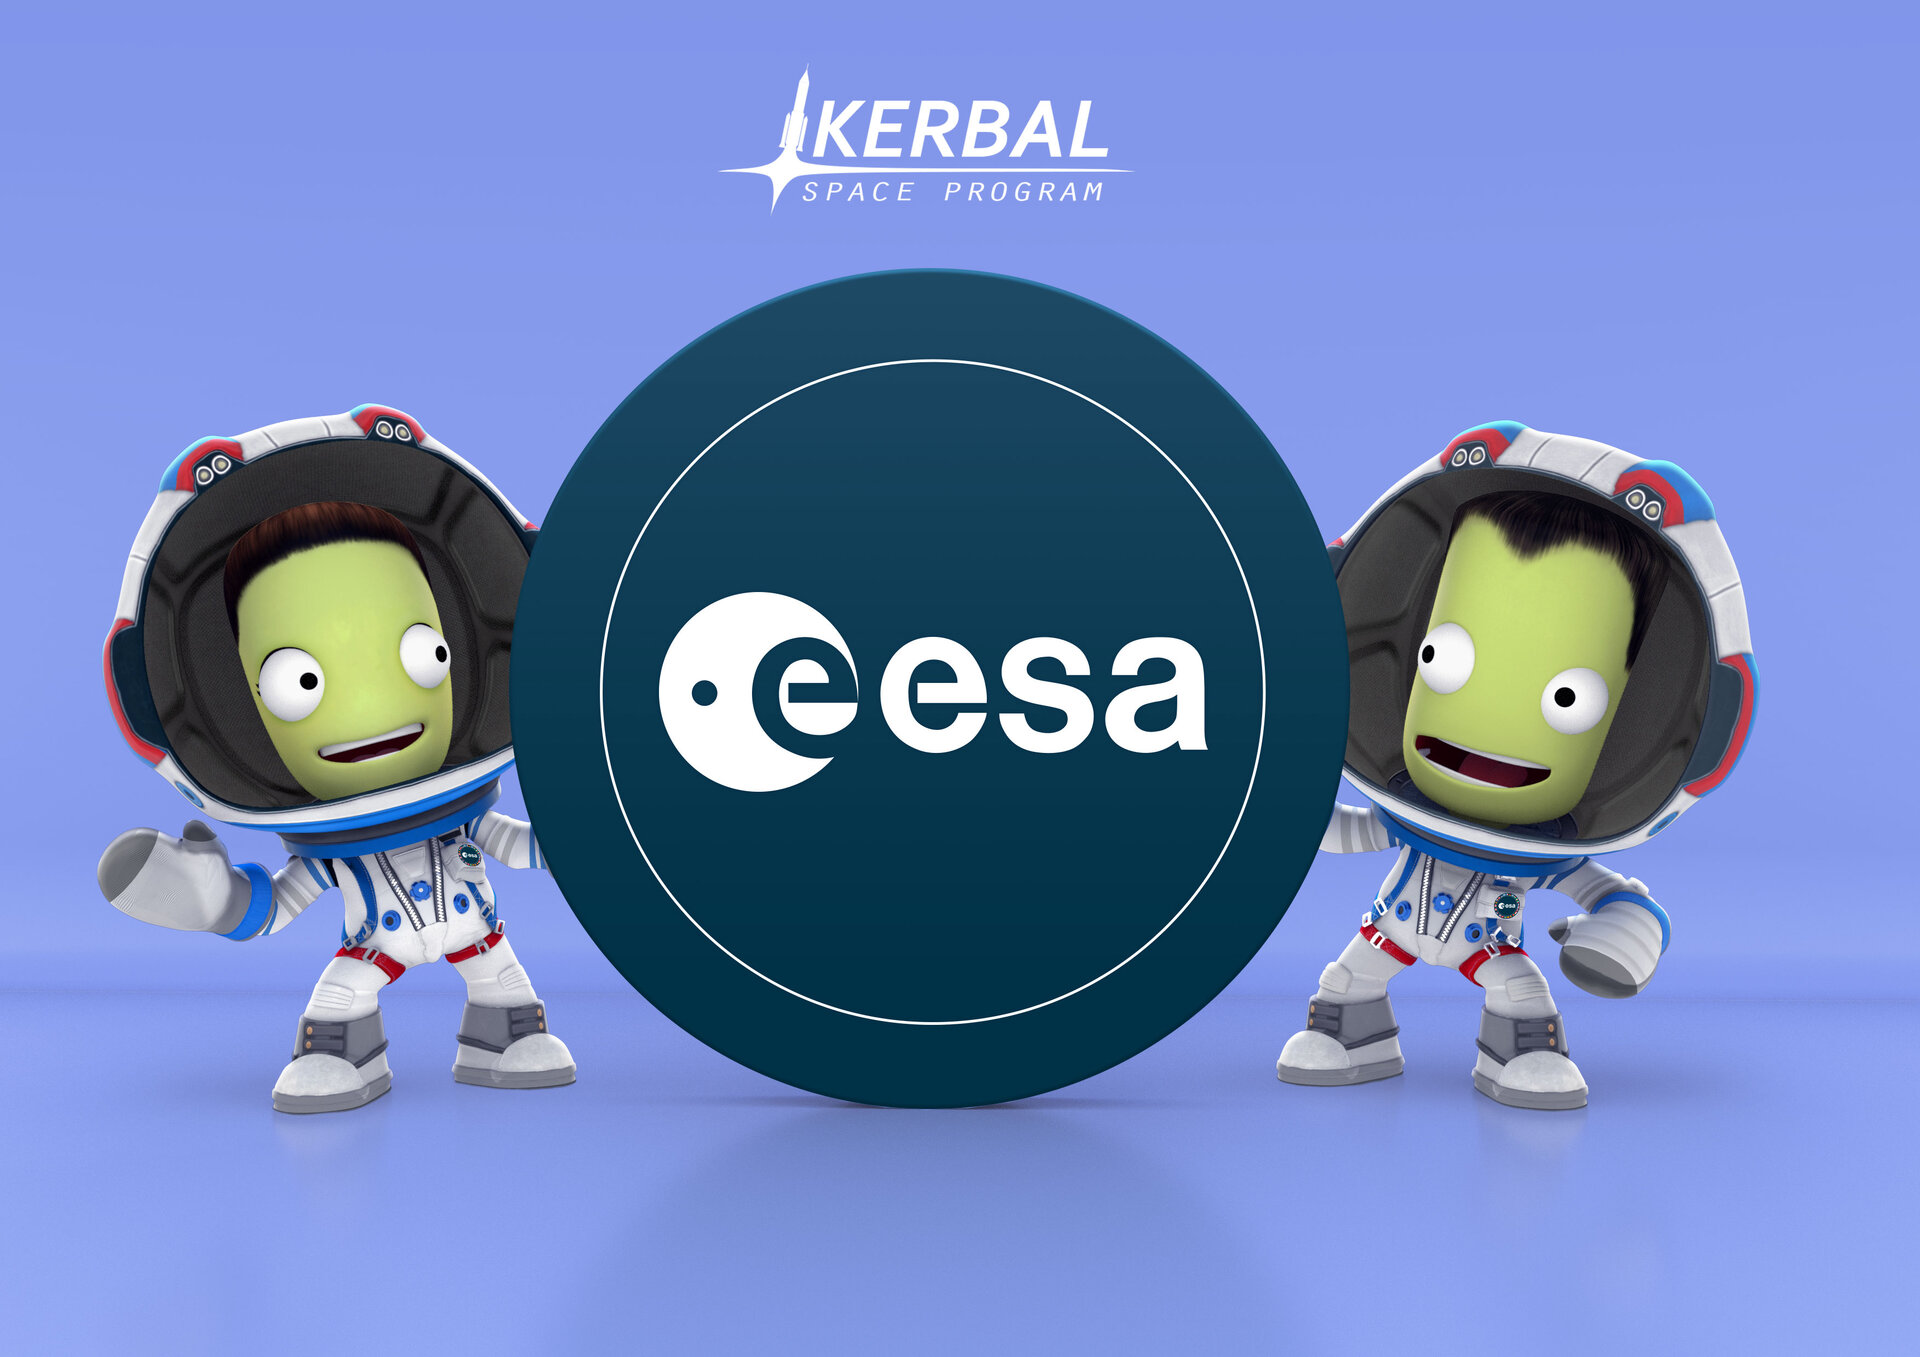 Kerbal and ESA partnership launch